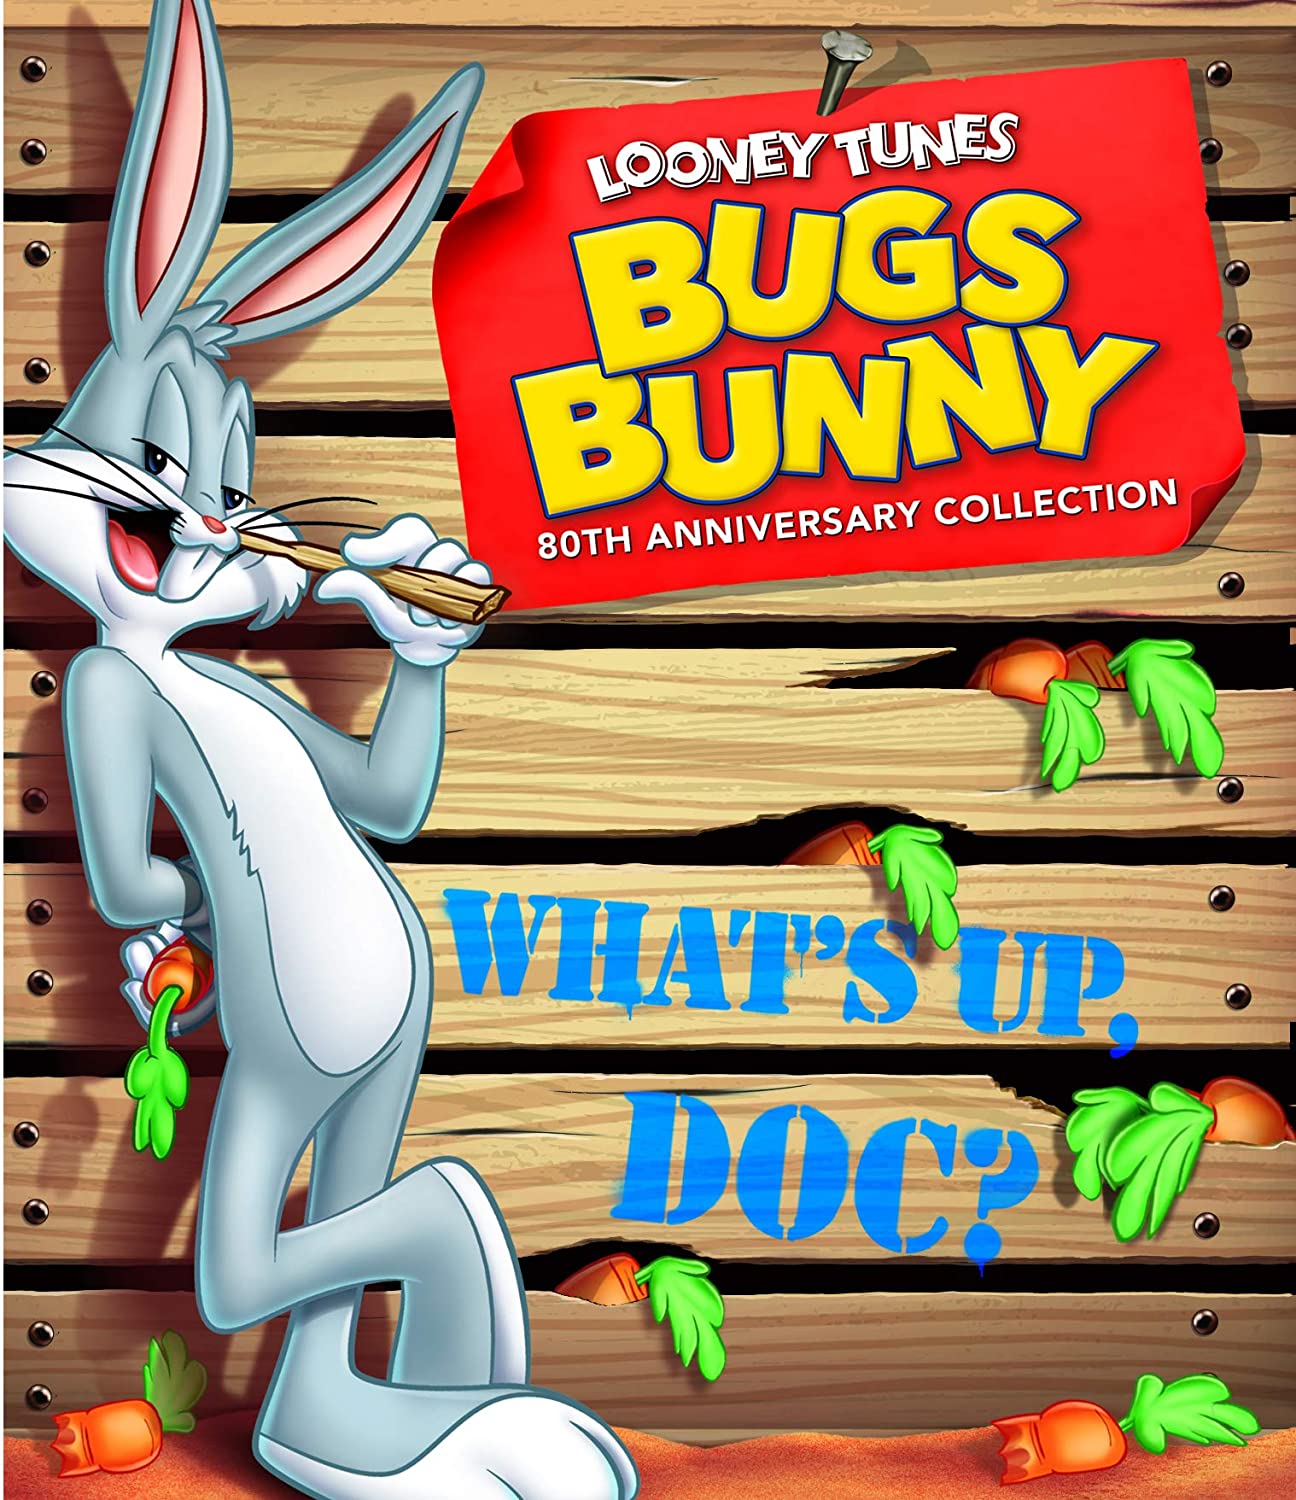 Warner Bros Animation logo (W/Bugs Bunny Classic) by